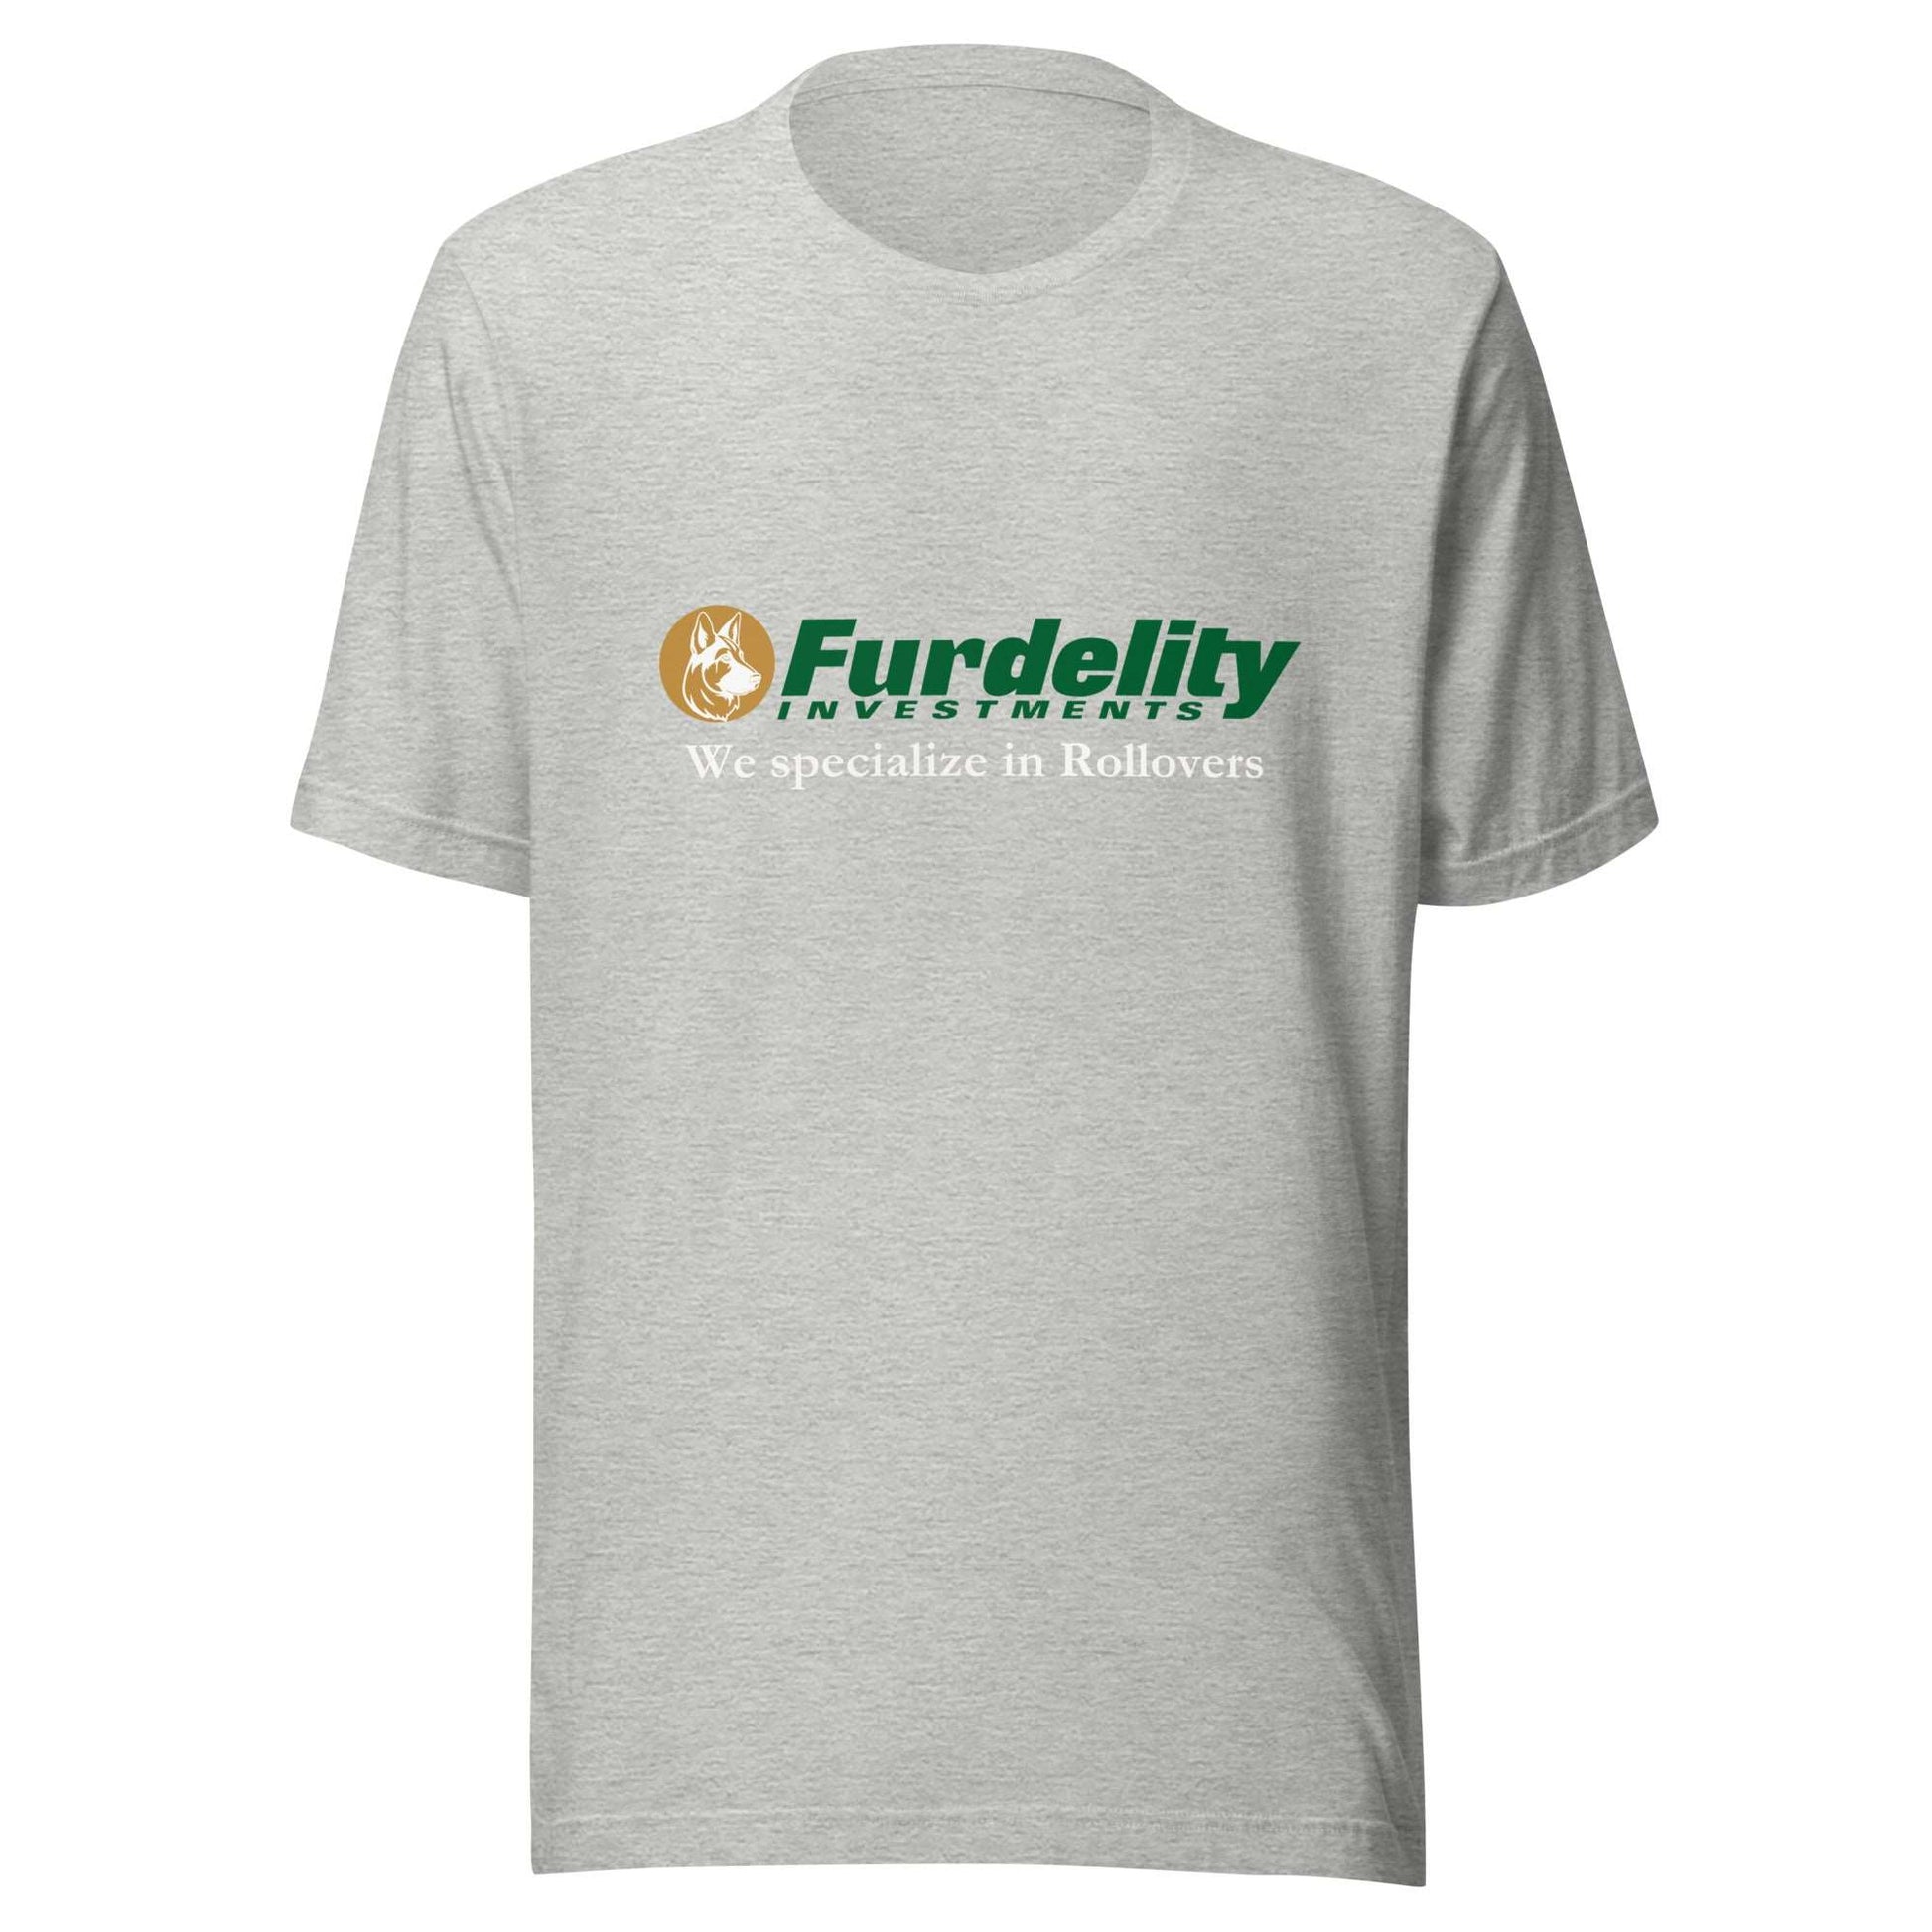 Furdelity Investments Unisex t-shirt